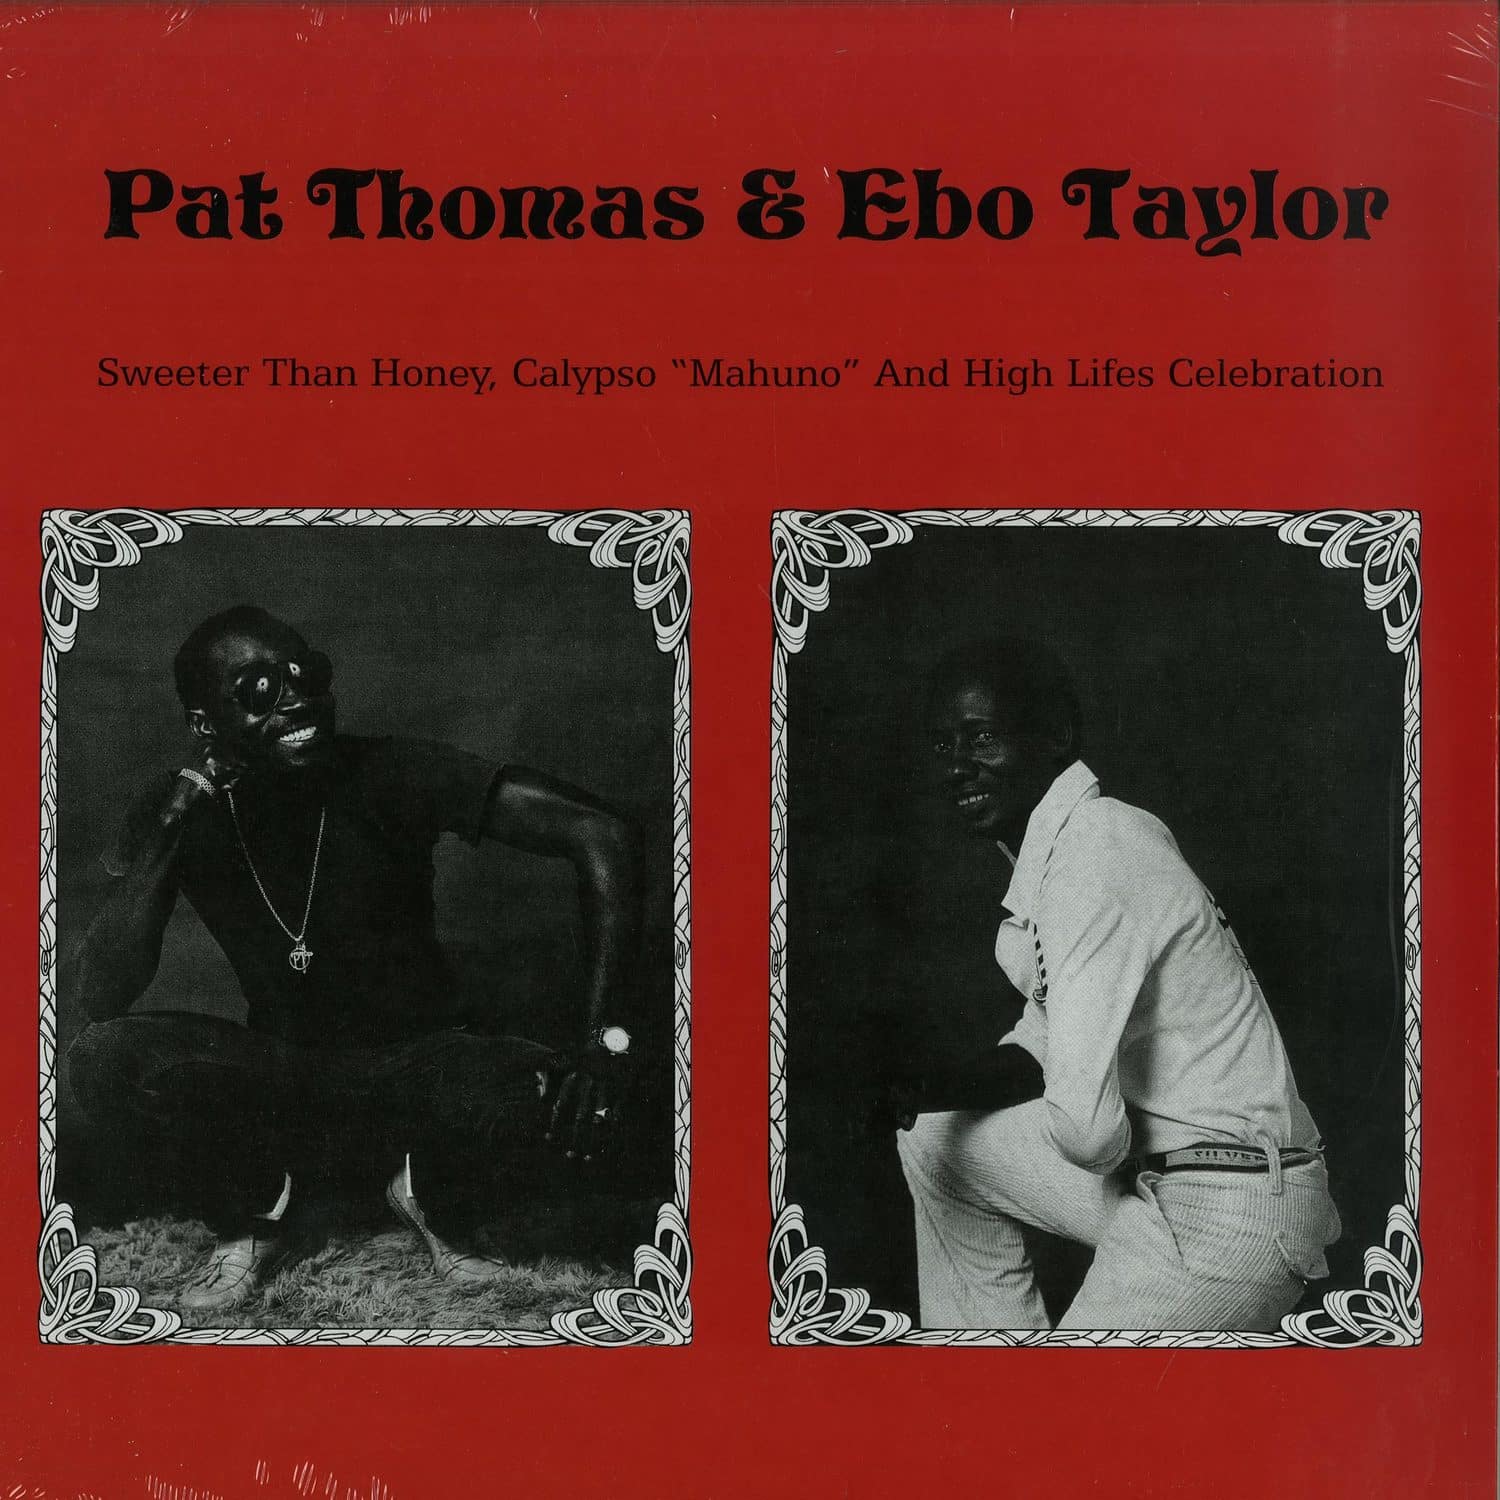 Pat Thomas & Ebo Taylor - SWEETER THAN HONEY - CALYPSO, MAHUNO AND HIGH LIFES CELEBRATION 